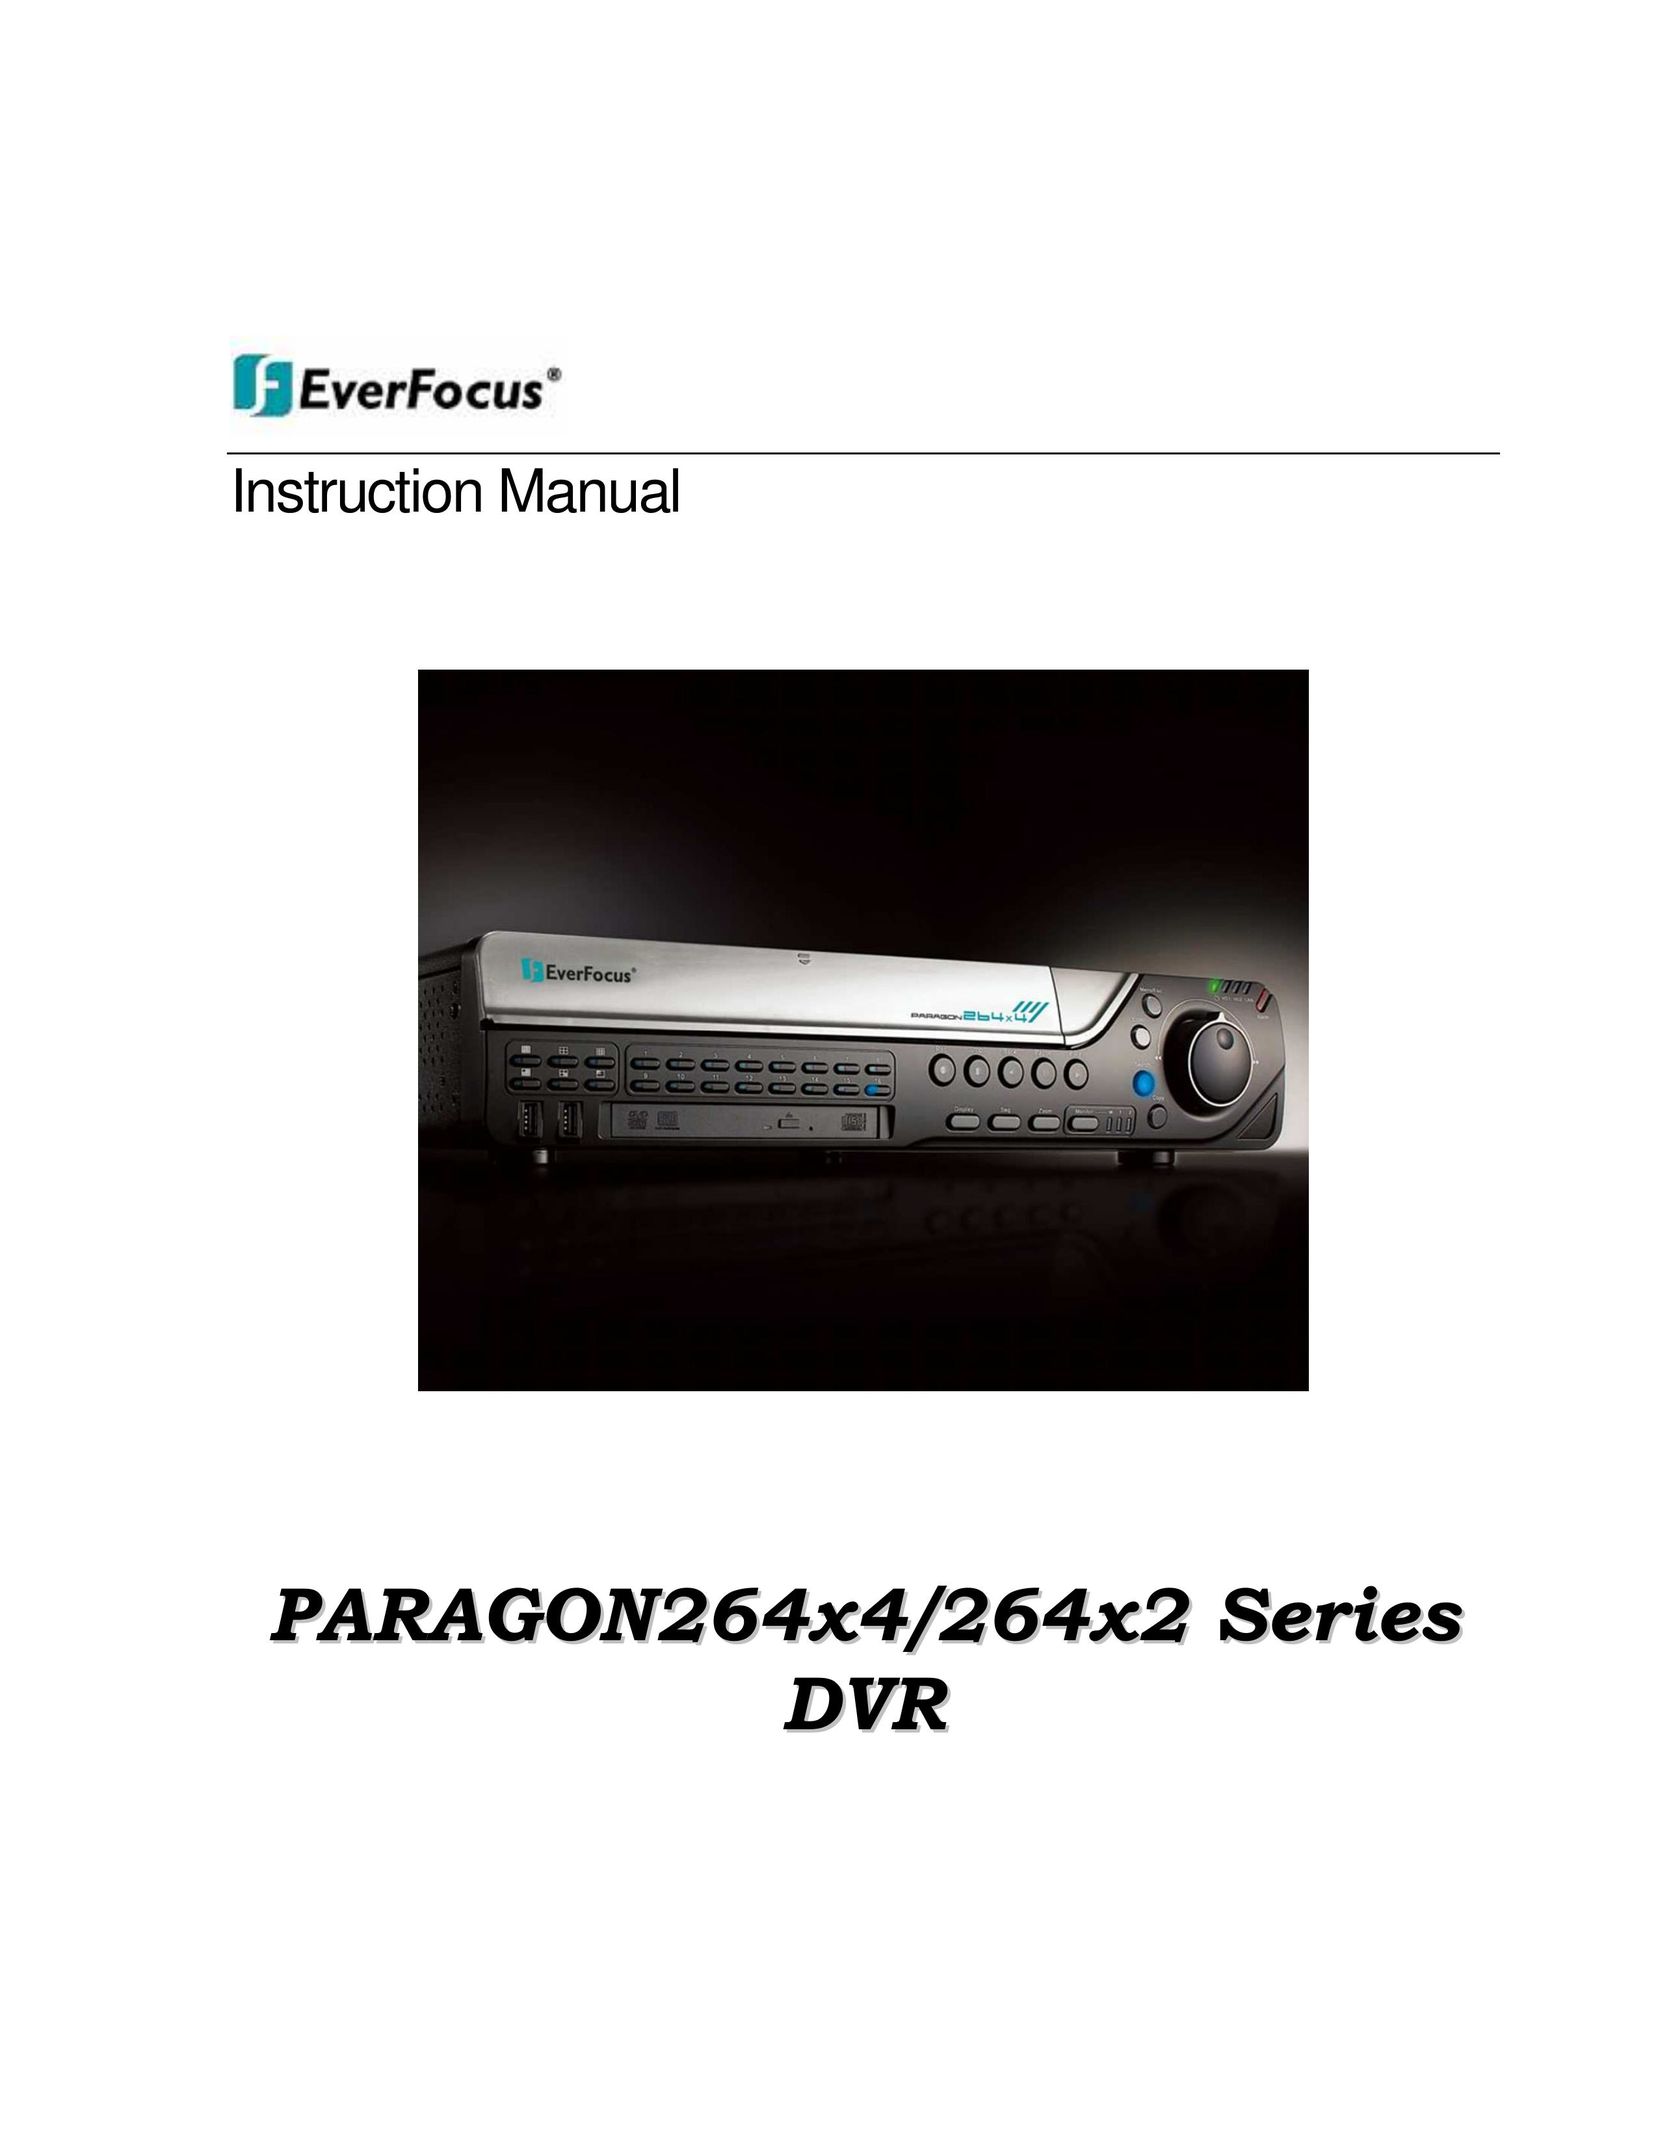 EverFocus 264x2 DVR User Manual